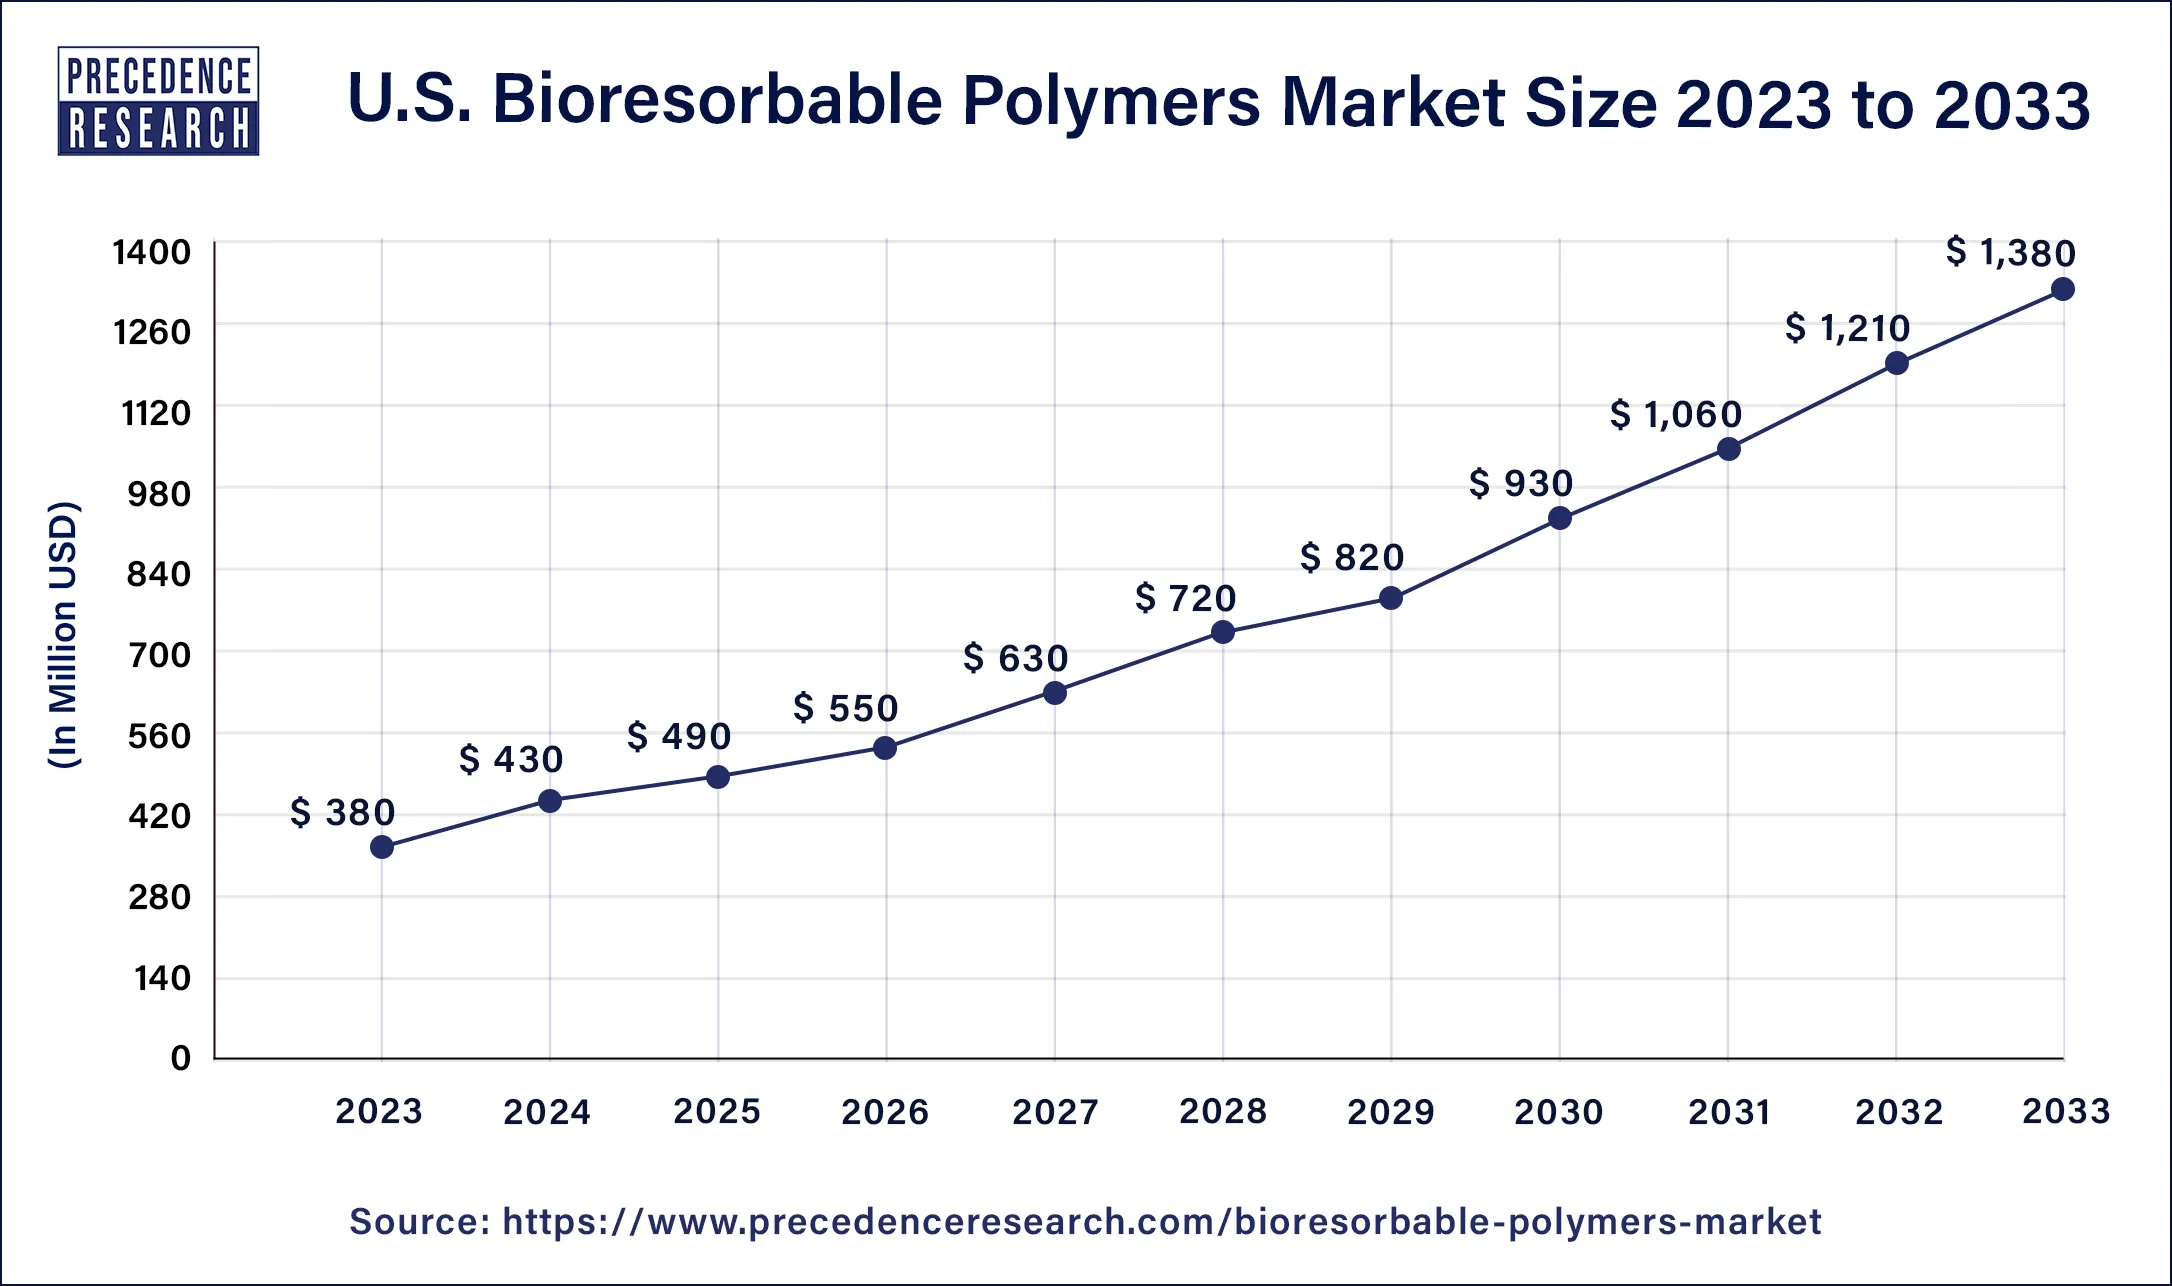 U.S. Bioresorbable Polymers Market Size 2024 to 2033